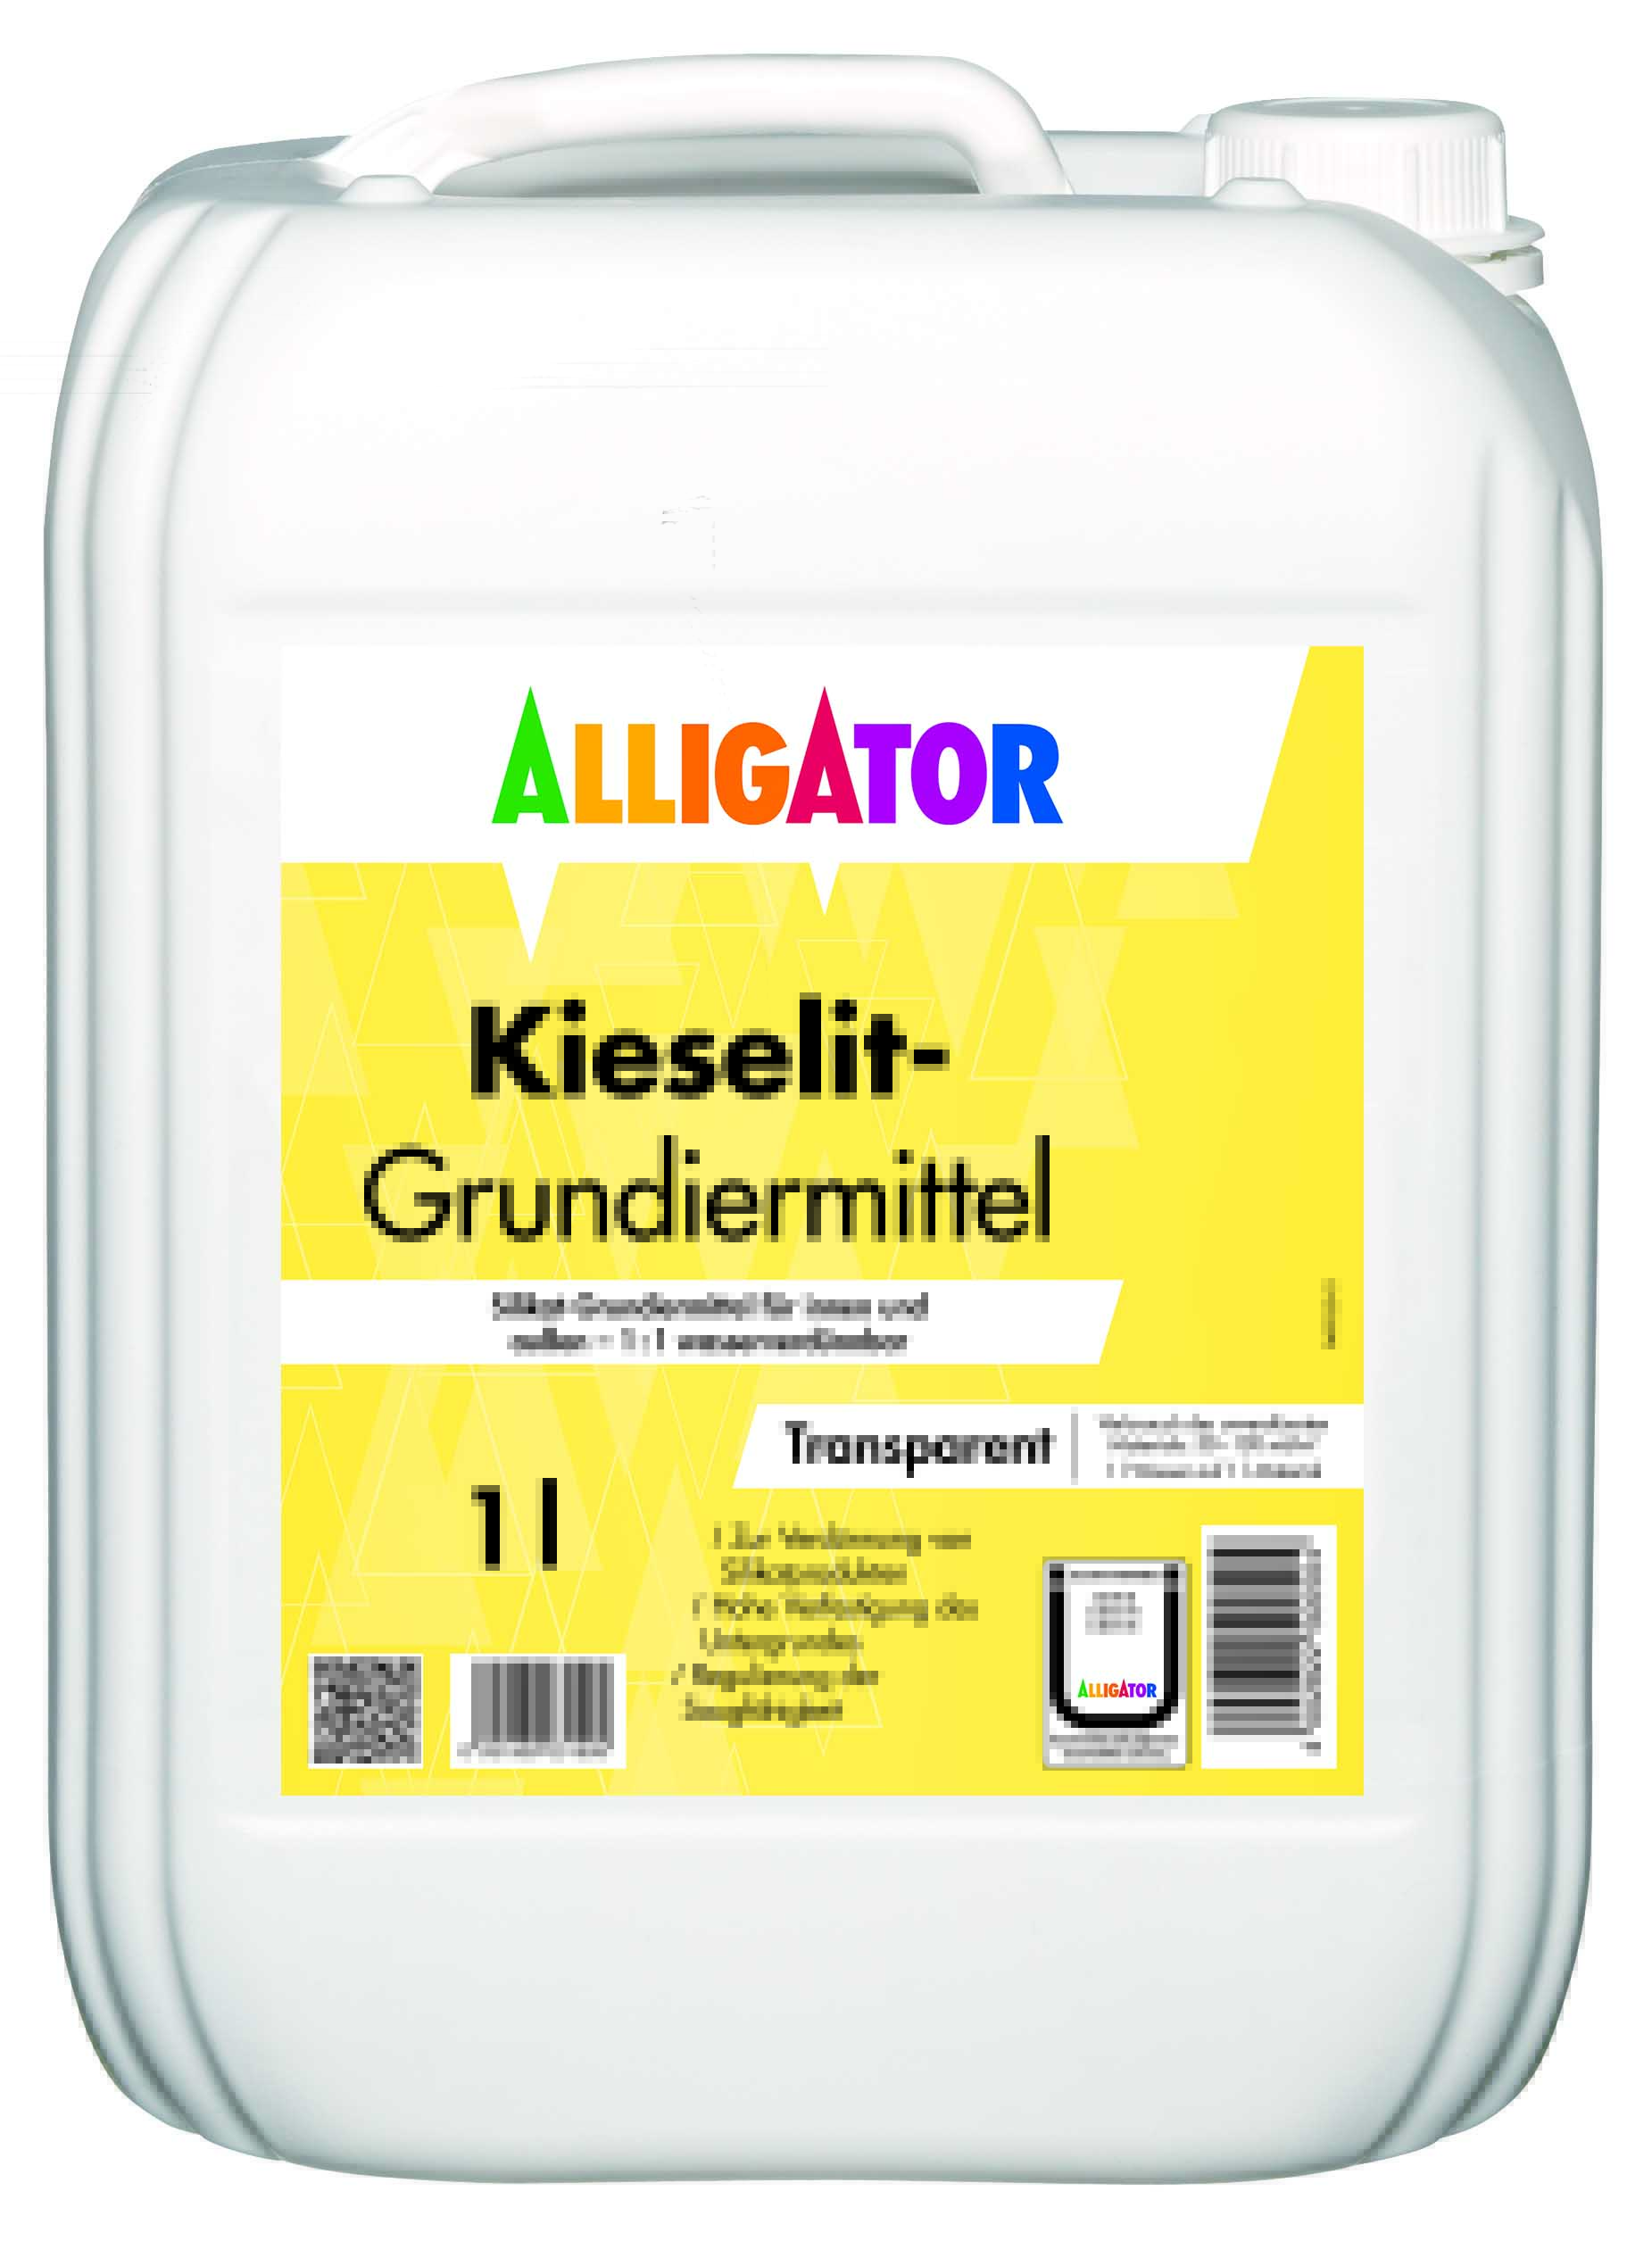 Alligator Kieselit-Grundiermittel